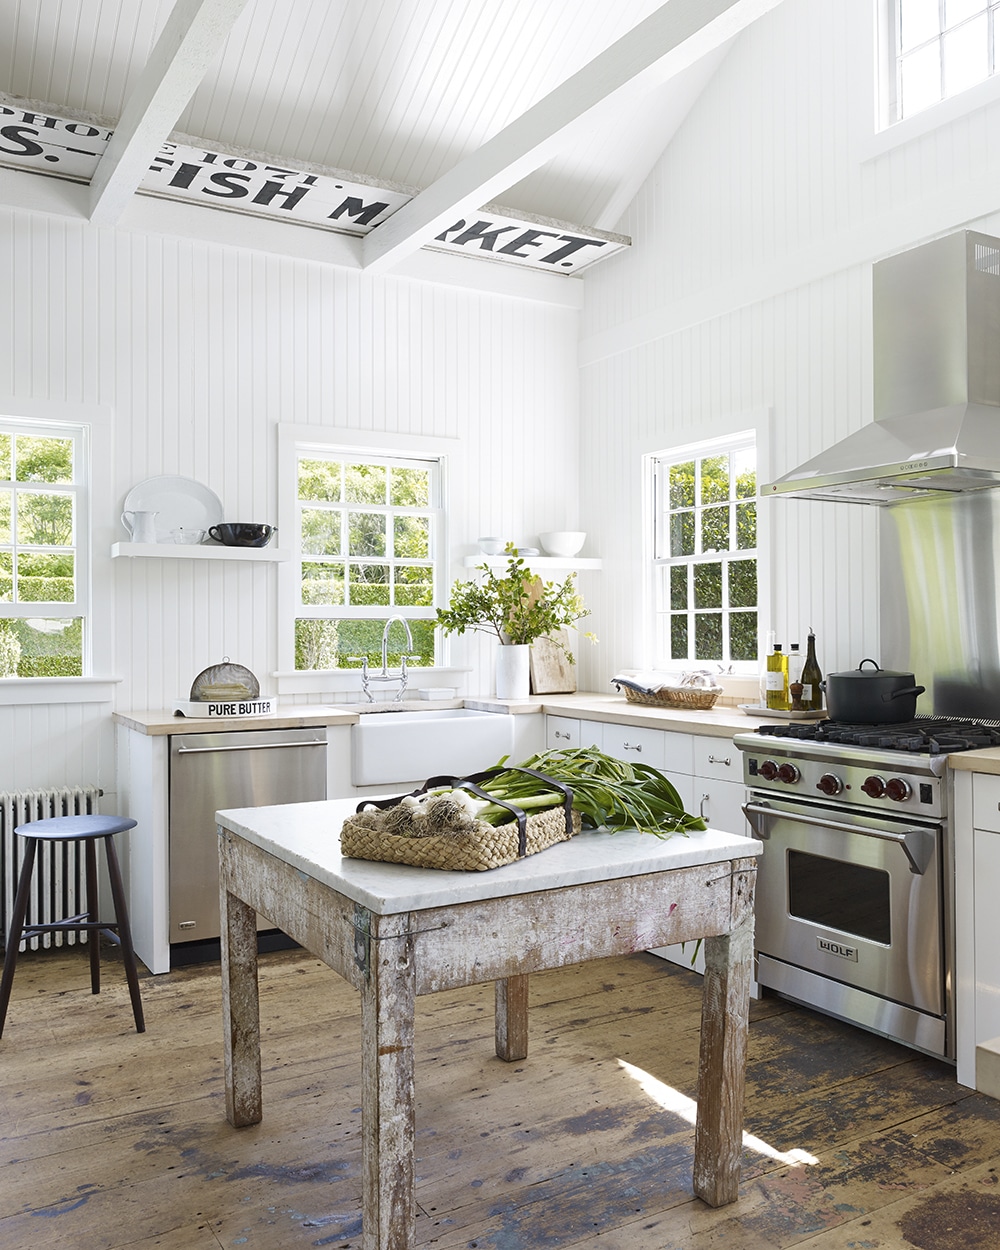 Mark Cunningham designed Southampton home -kitchen, kitchen island, kitchen decor